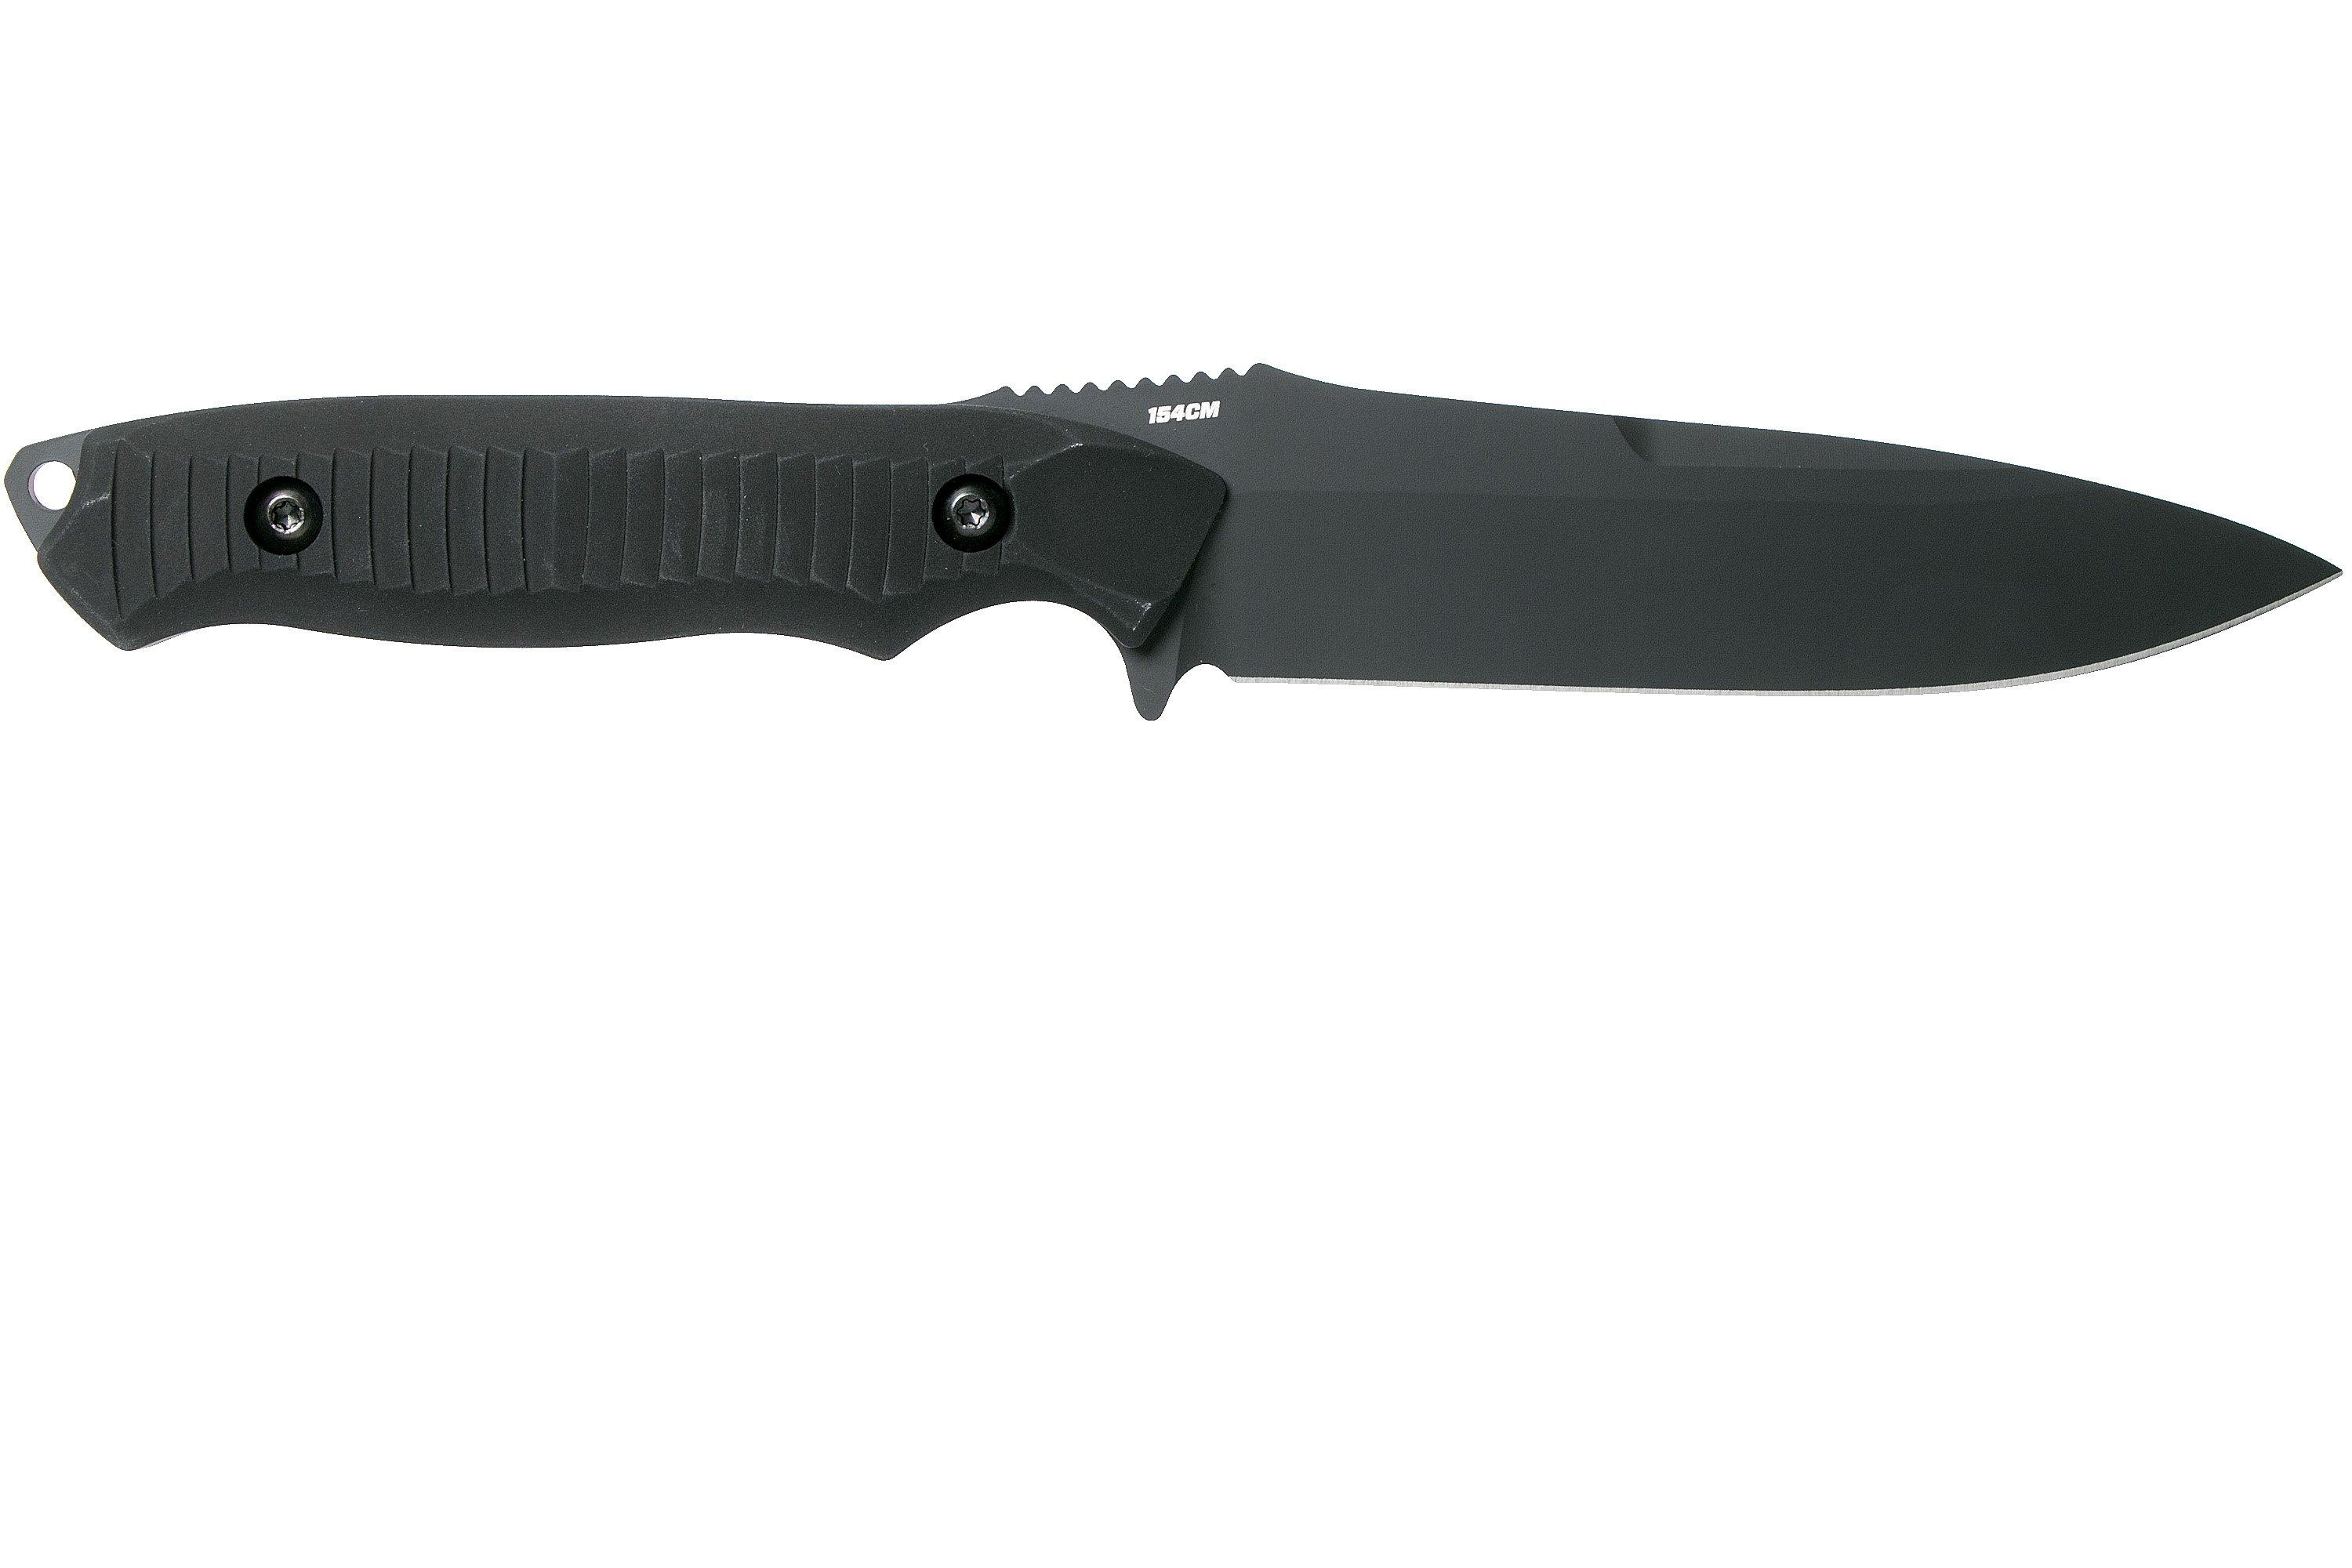 Benchmade Nimravus 140BK survival knife | Advantageously shopping at ...